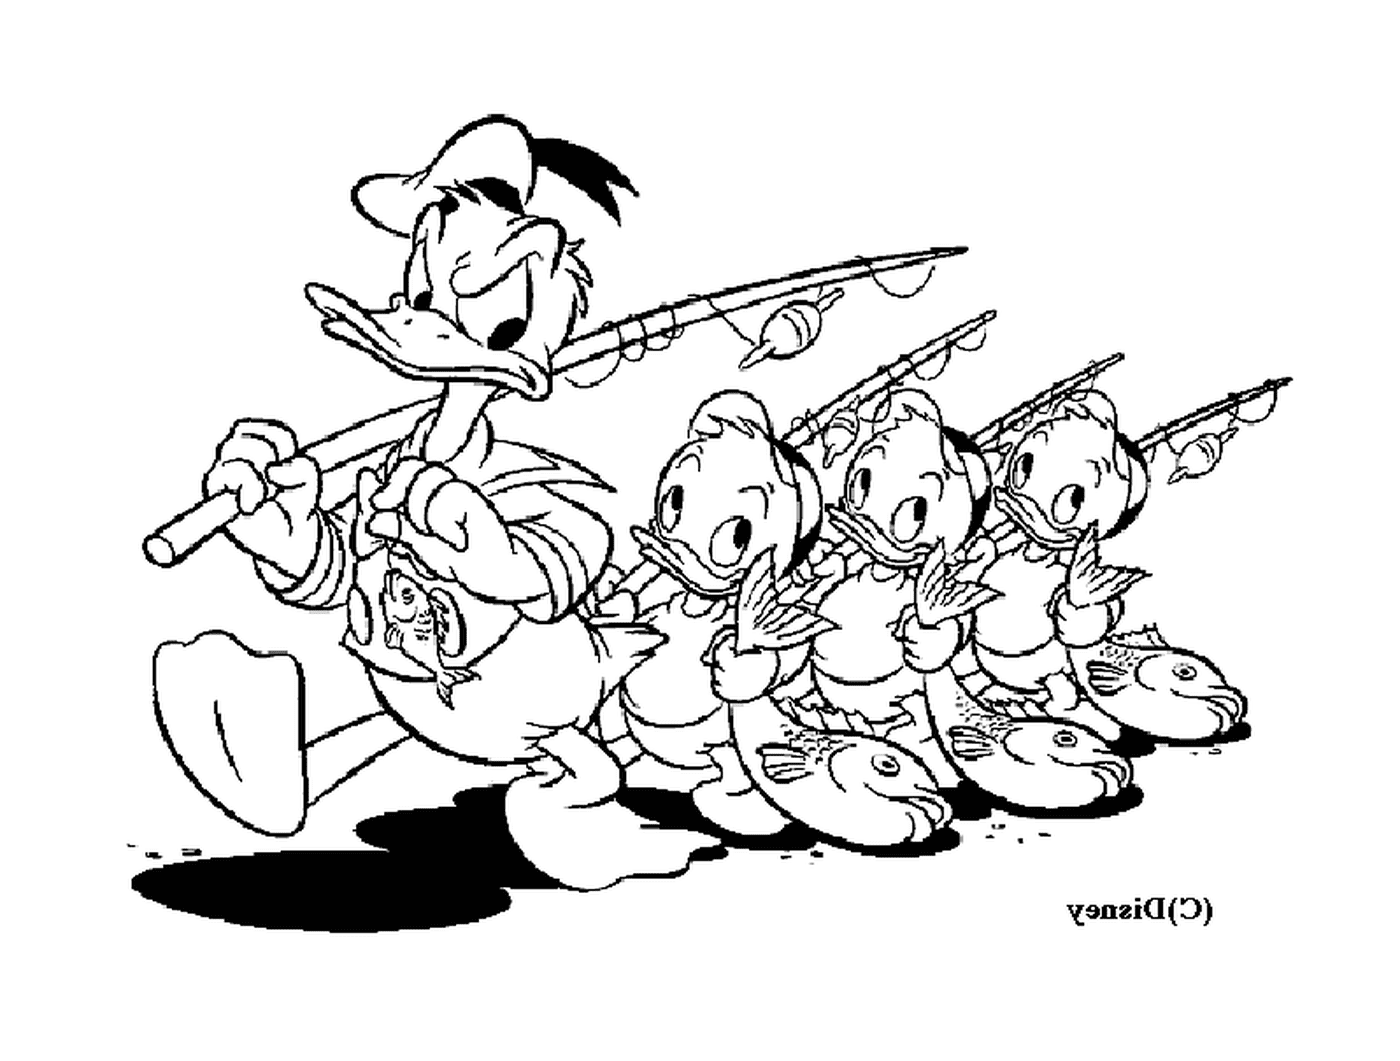  Donald and his nephews fish with joy 